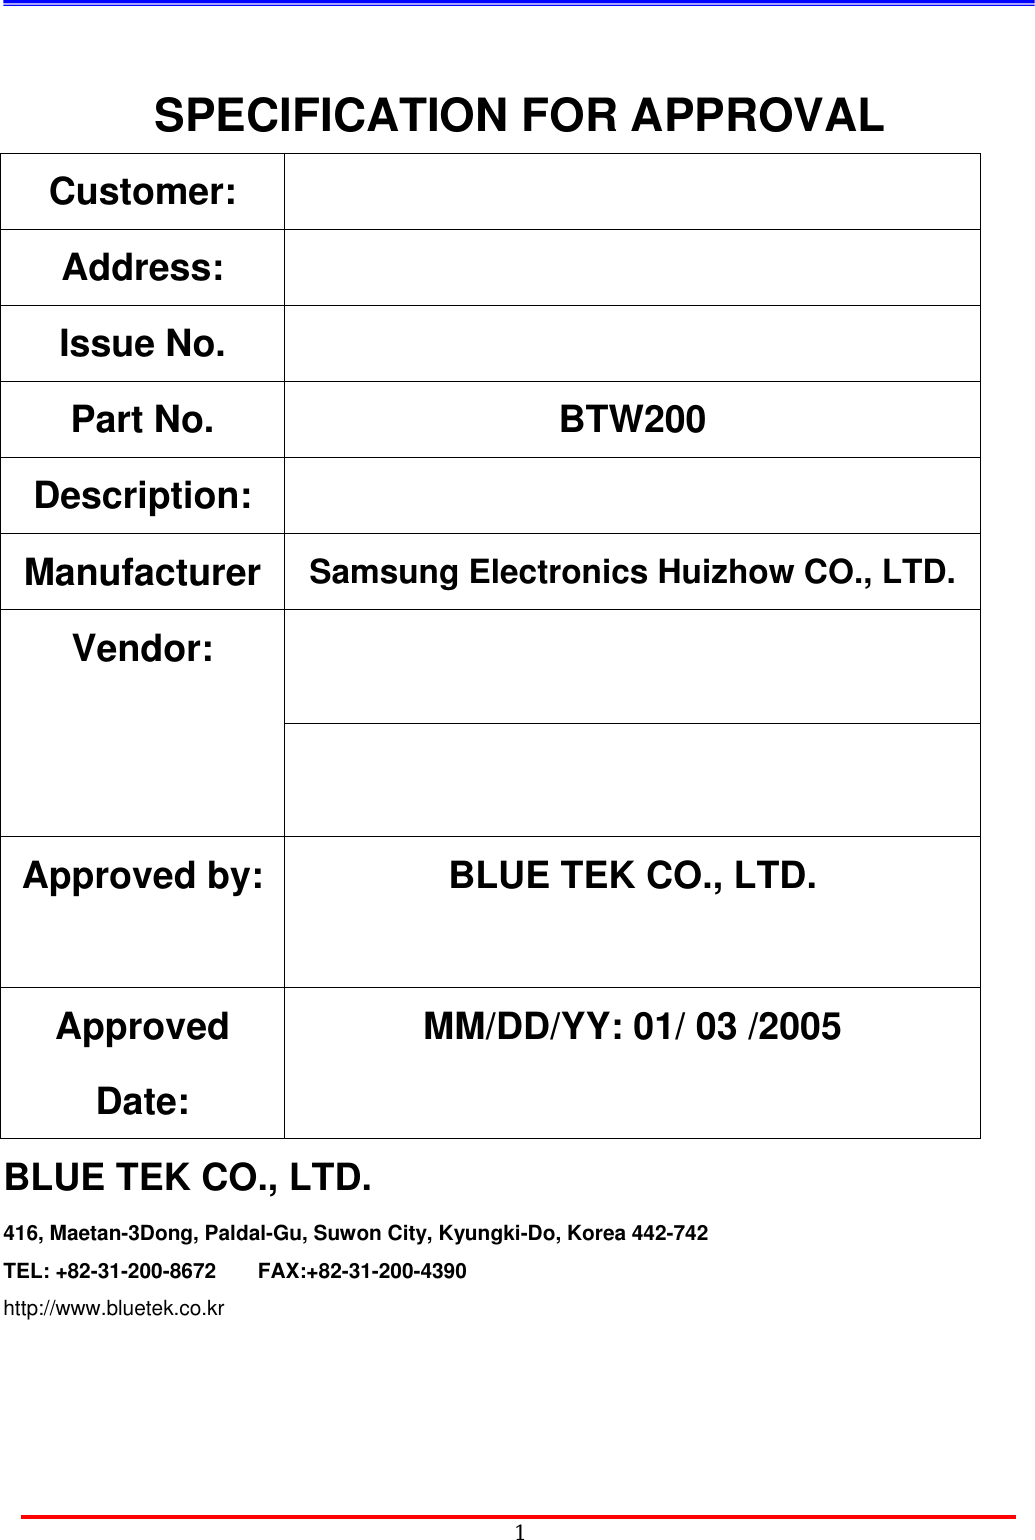                                            1SPECIFICATION FOR APPROVAL Customer:  Address:   Issue No.     Part No.  BTW200   Description:  Manufacturer  Samsung Electronics Huizhow CO., LTD.    Vendor:    Approved by:  BLUE TEK CO., LTD.   Approved Date: MM/DD/YY: 01/ 03 /2005 BLUE TEK CO., LTD. 416, Maetan-3Dong, Paldal-Gu, Suwon City, Kyungki-Do, Korea 442-742 TEL: +82-31-200-8672    FAX:+82-31-200-4390 http://www.bluetek.co.kr    